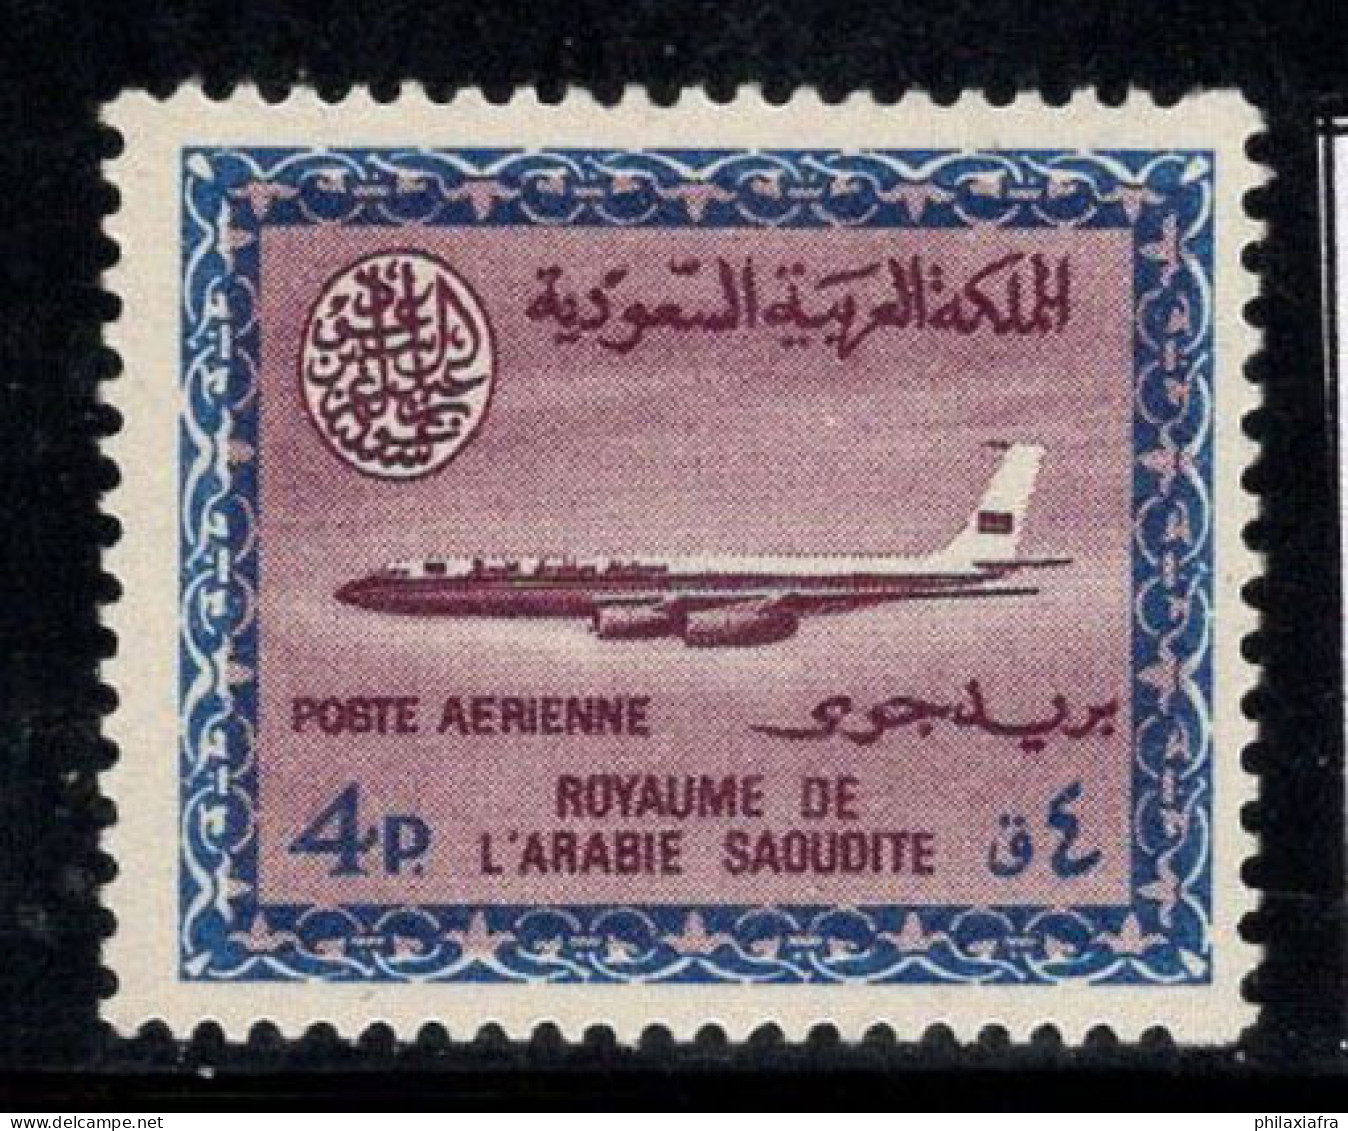 Arabie Saoudite 1965-72 Mi. 245 Neuf ** 100% Poste Aérienne 4 Pia, Boeing 720 B - Arabie Saoudite